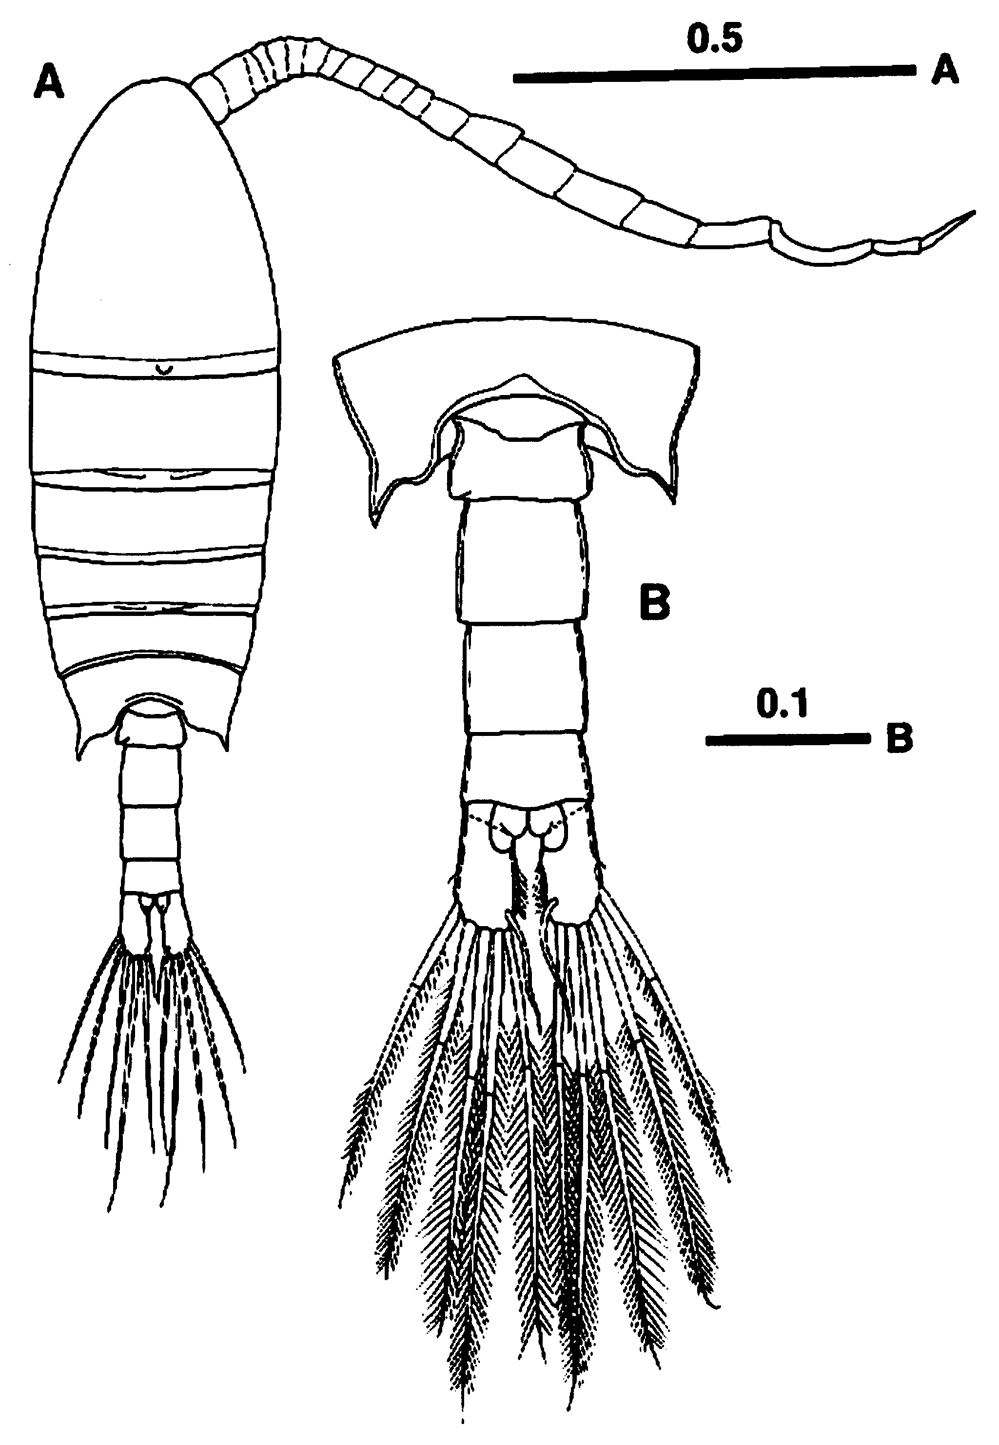 Species Centropages maigo - Plate 5 of morphological figures